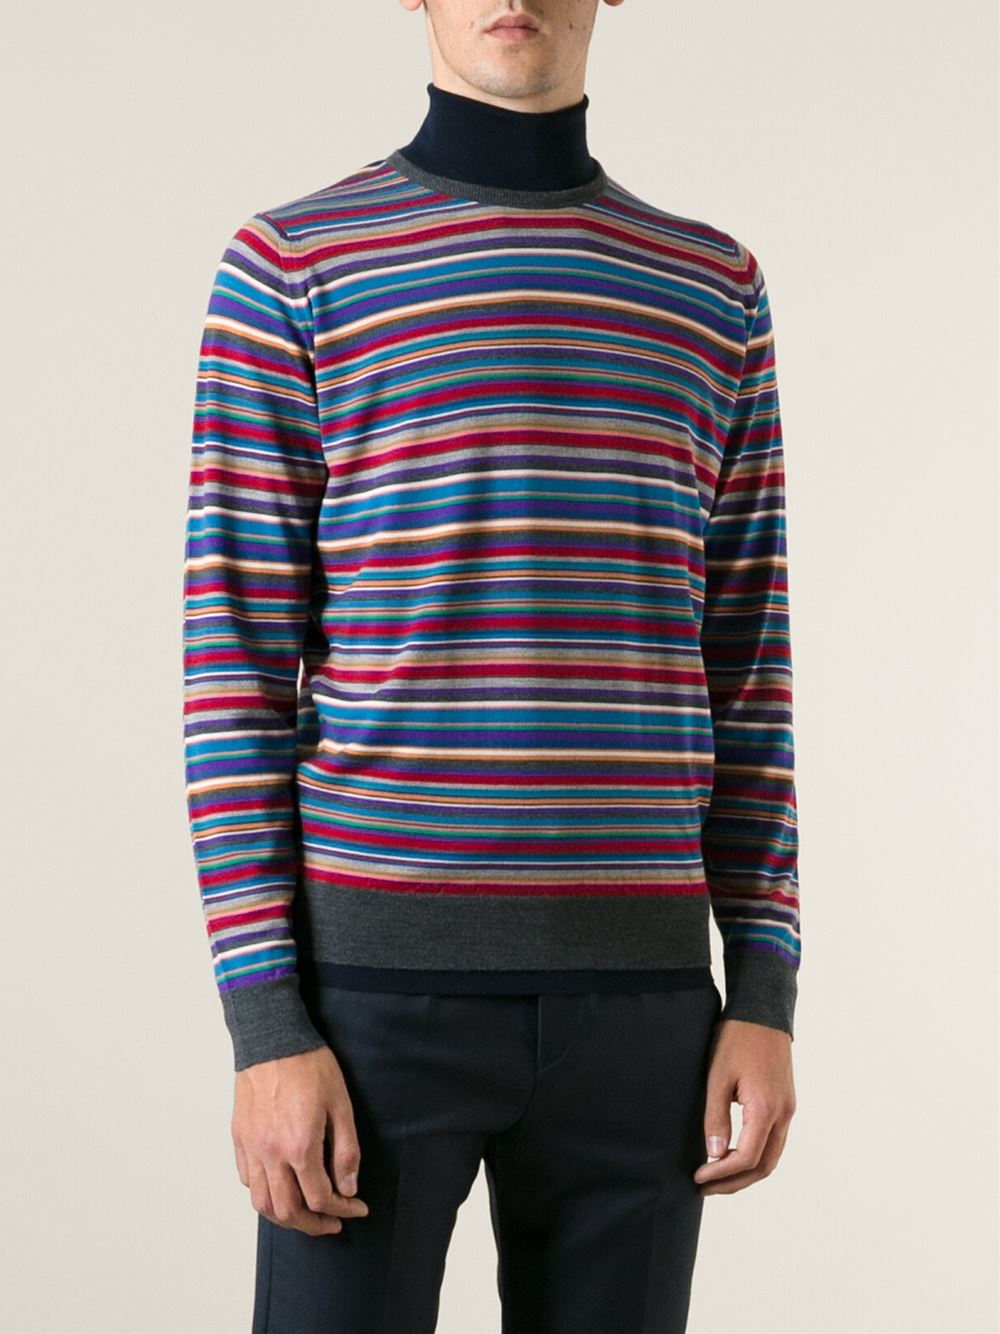 John Smedley Striped Turtleneck Sweater for Men - Lyst